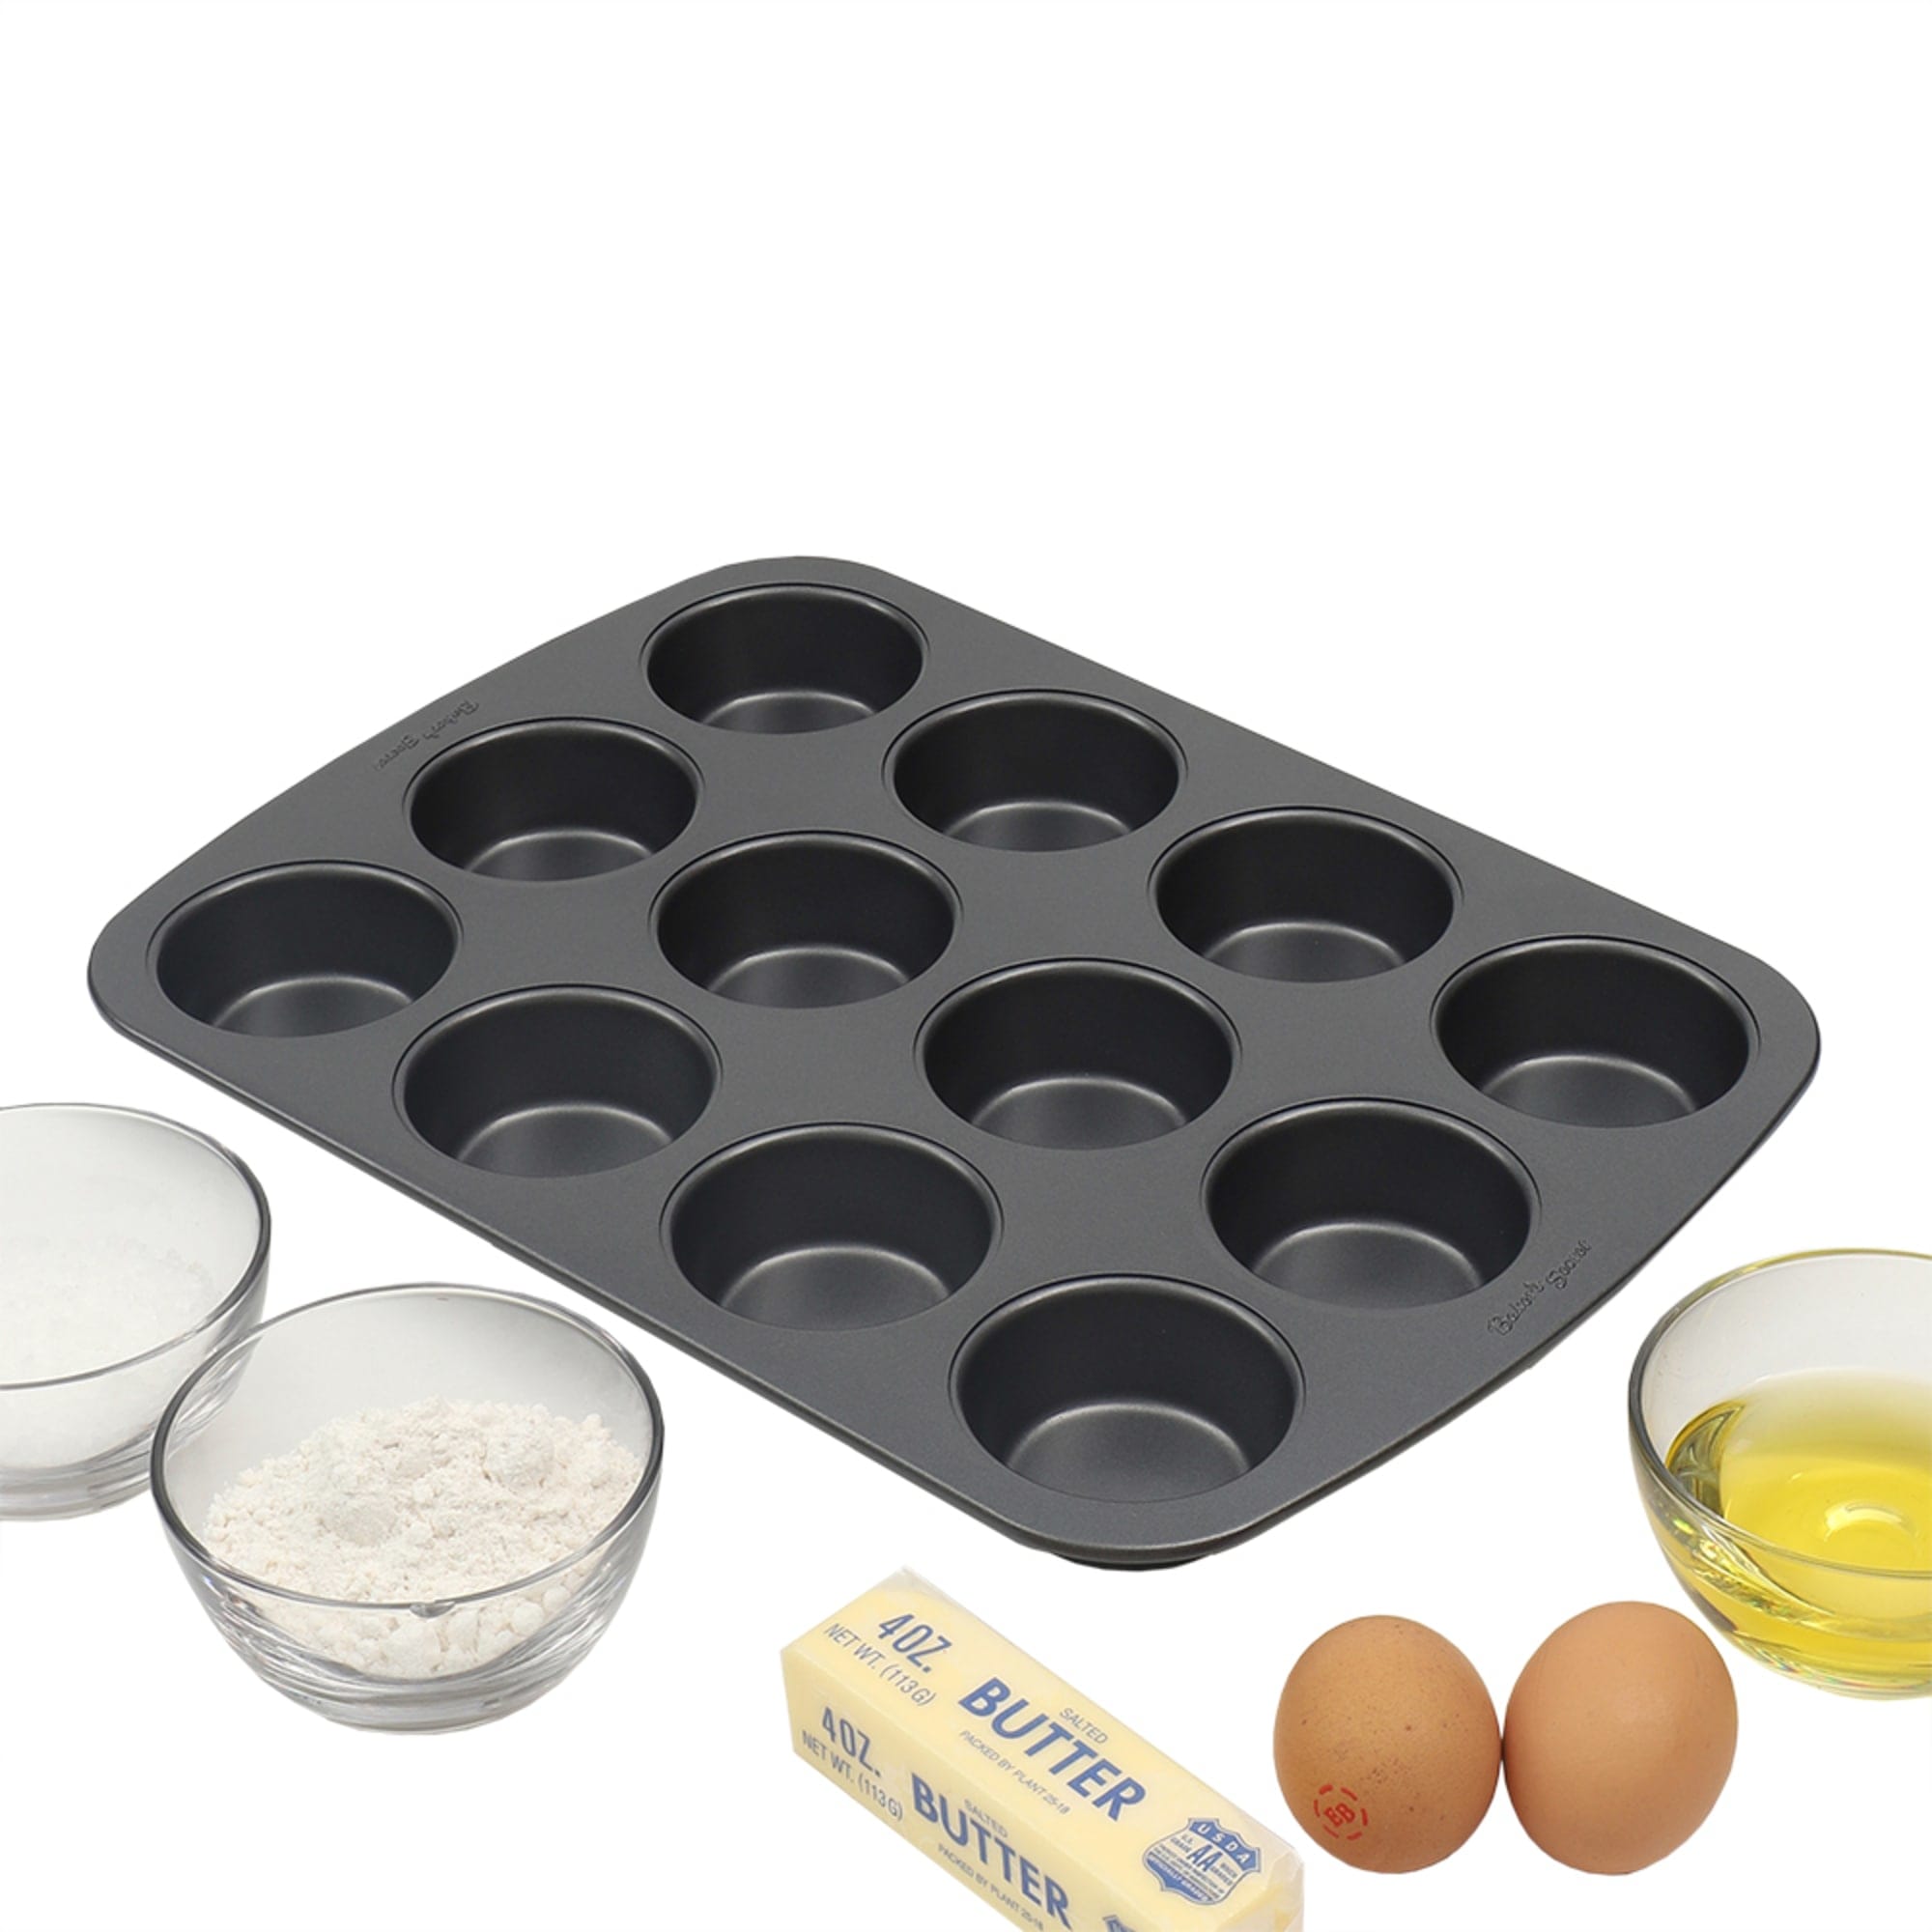 Baker’s Secret Essentials 12-Cup Non-Stick Steel Muffin Pan $8.00 EACH, CASE PACK OF 12